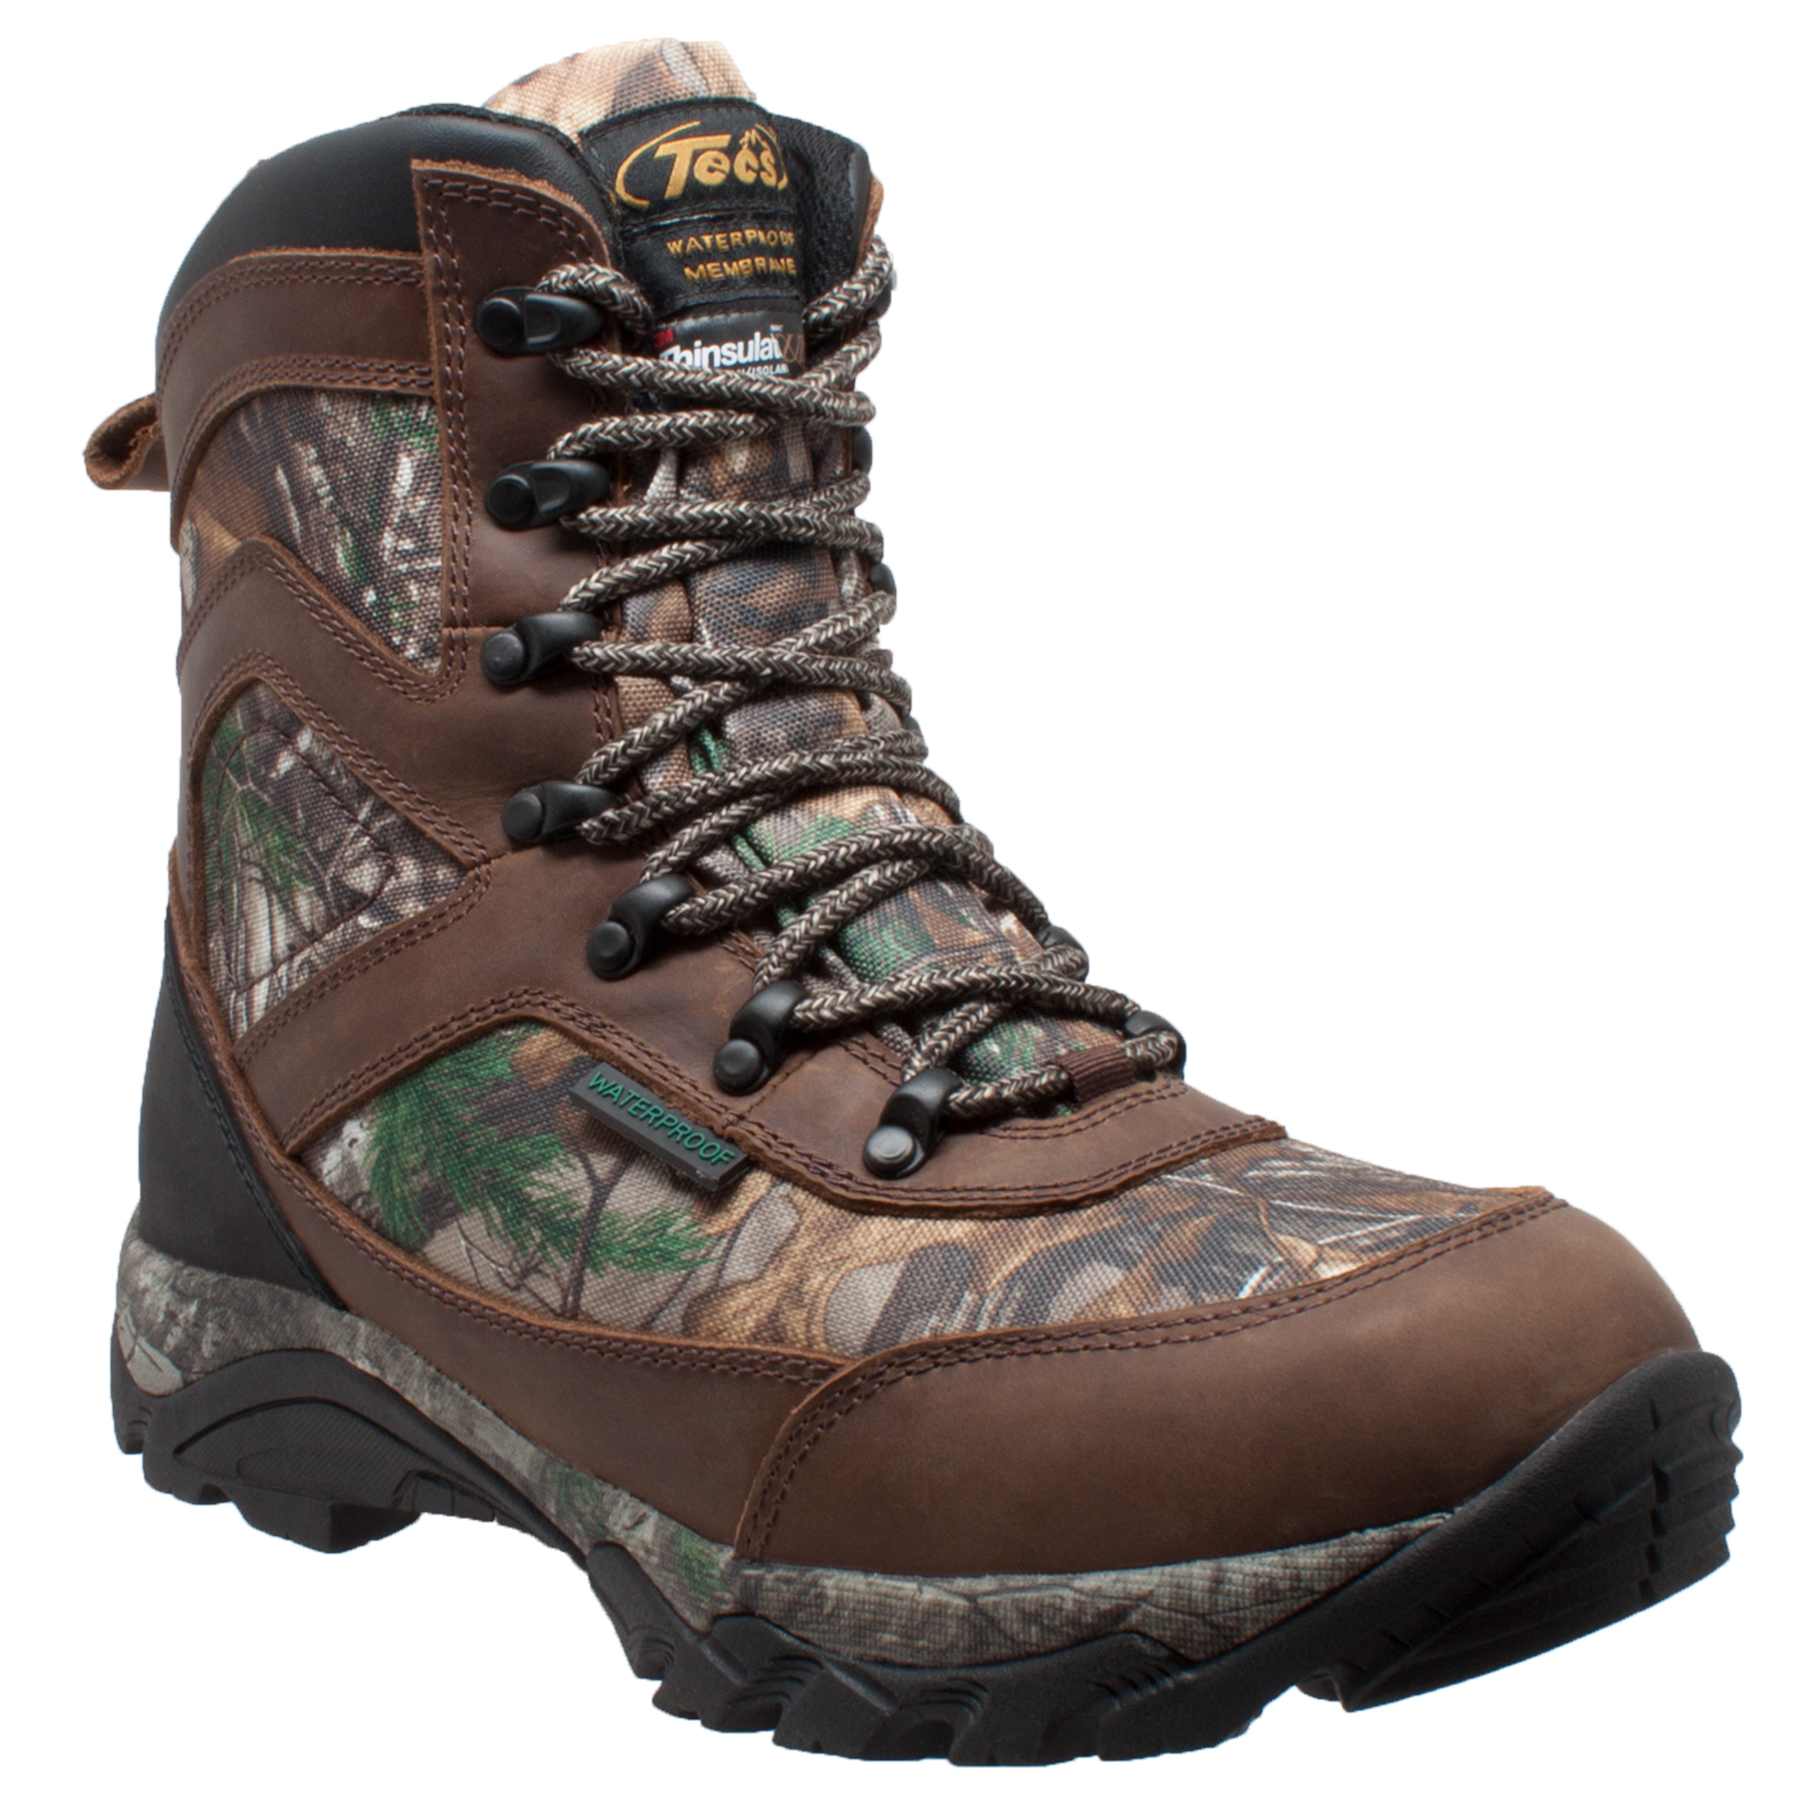 Tecs Men's 9" Camo Waterproof Hunting Boot - Wide Width Available